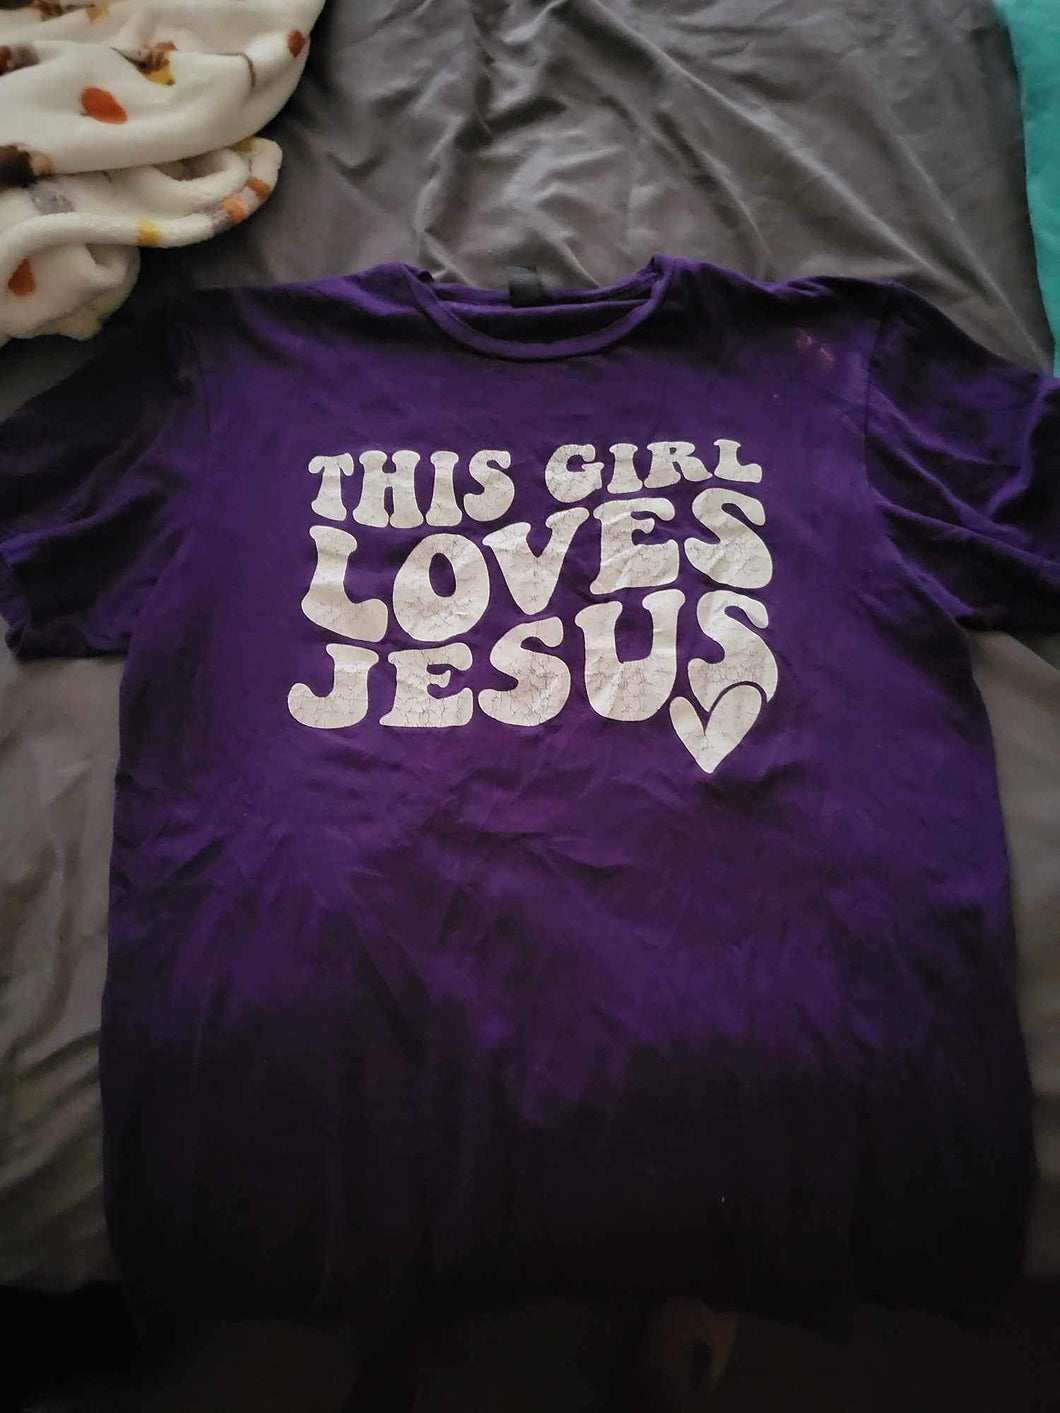 This girl love Jesus